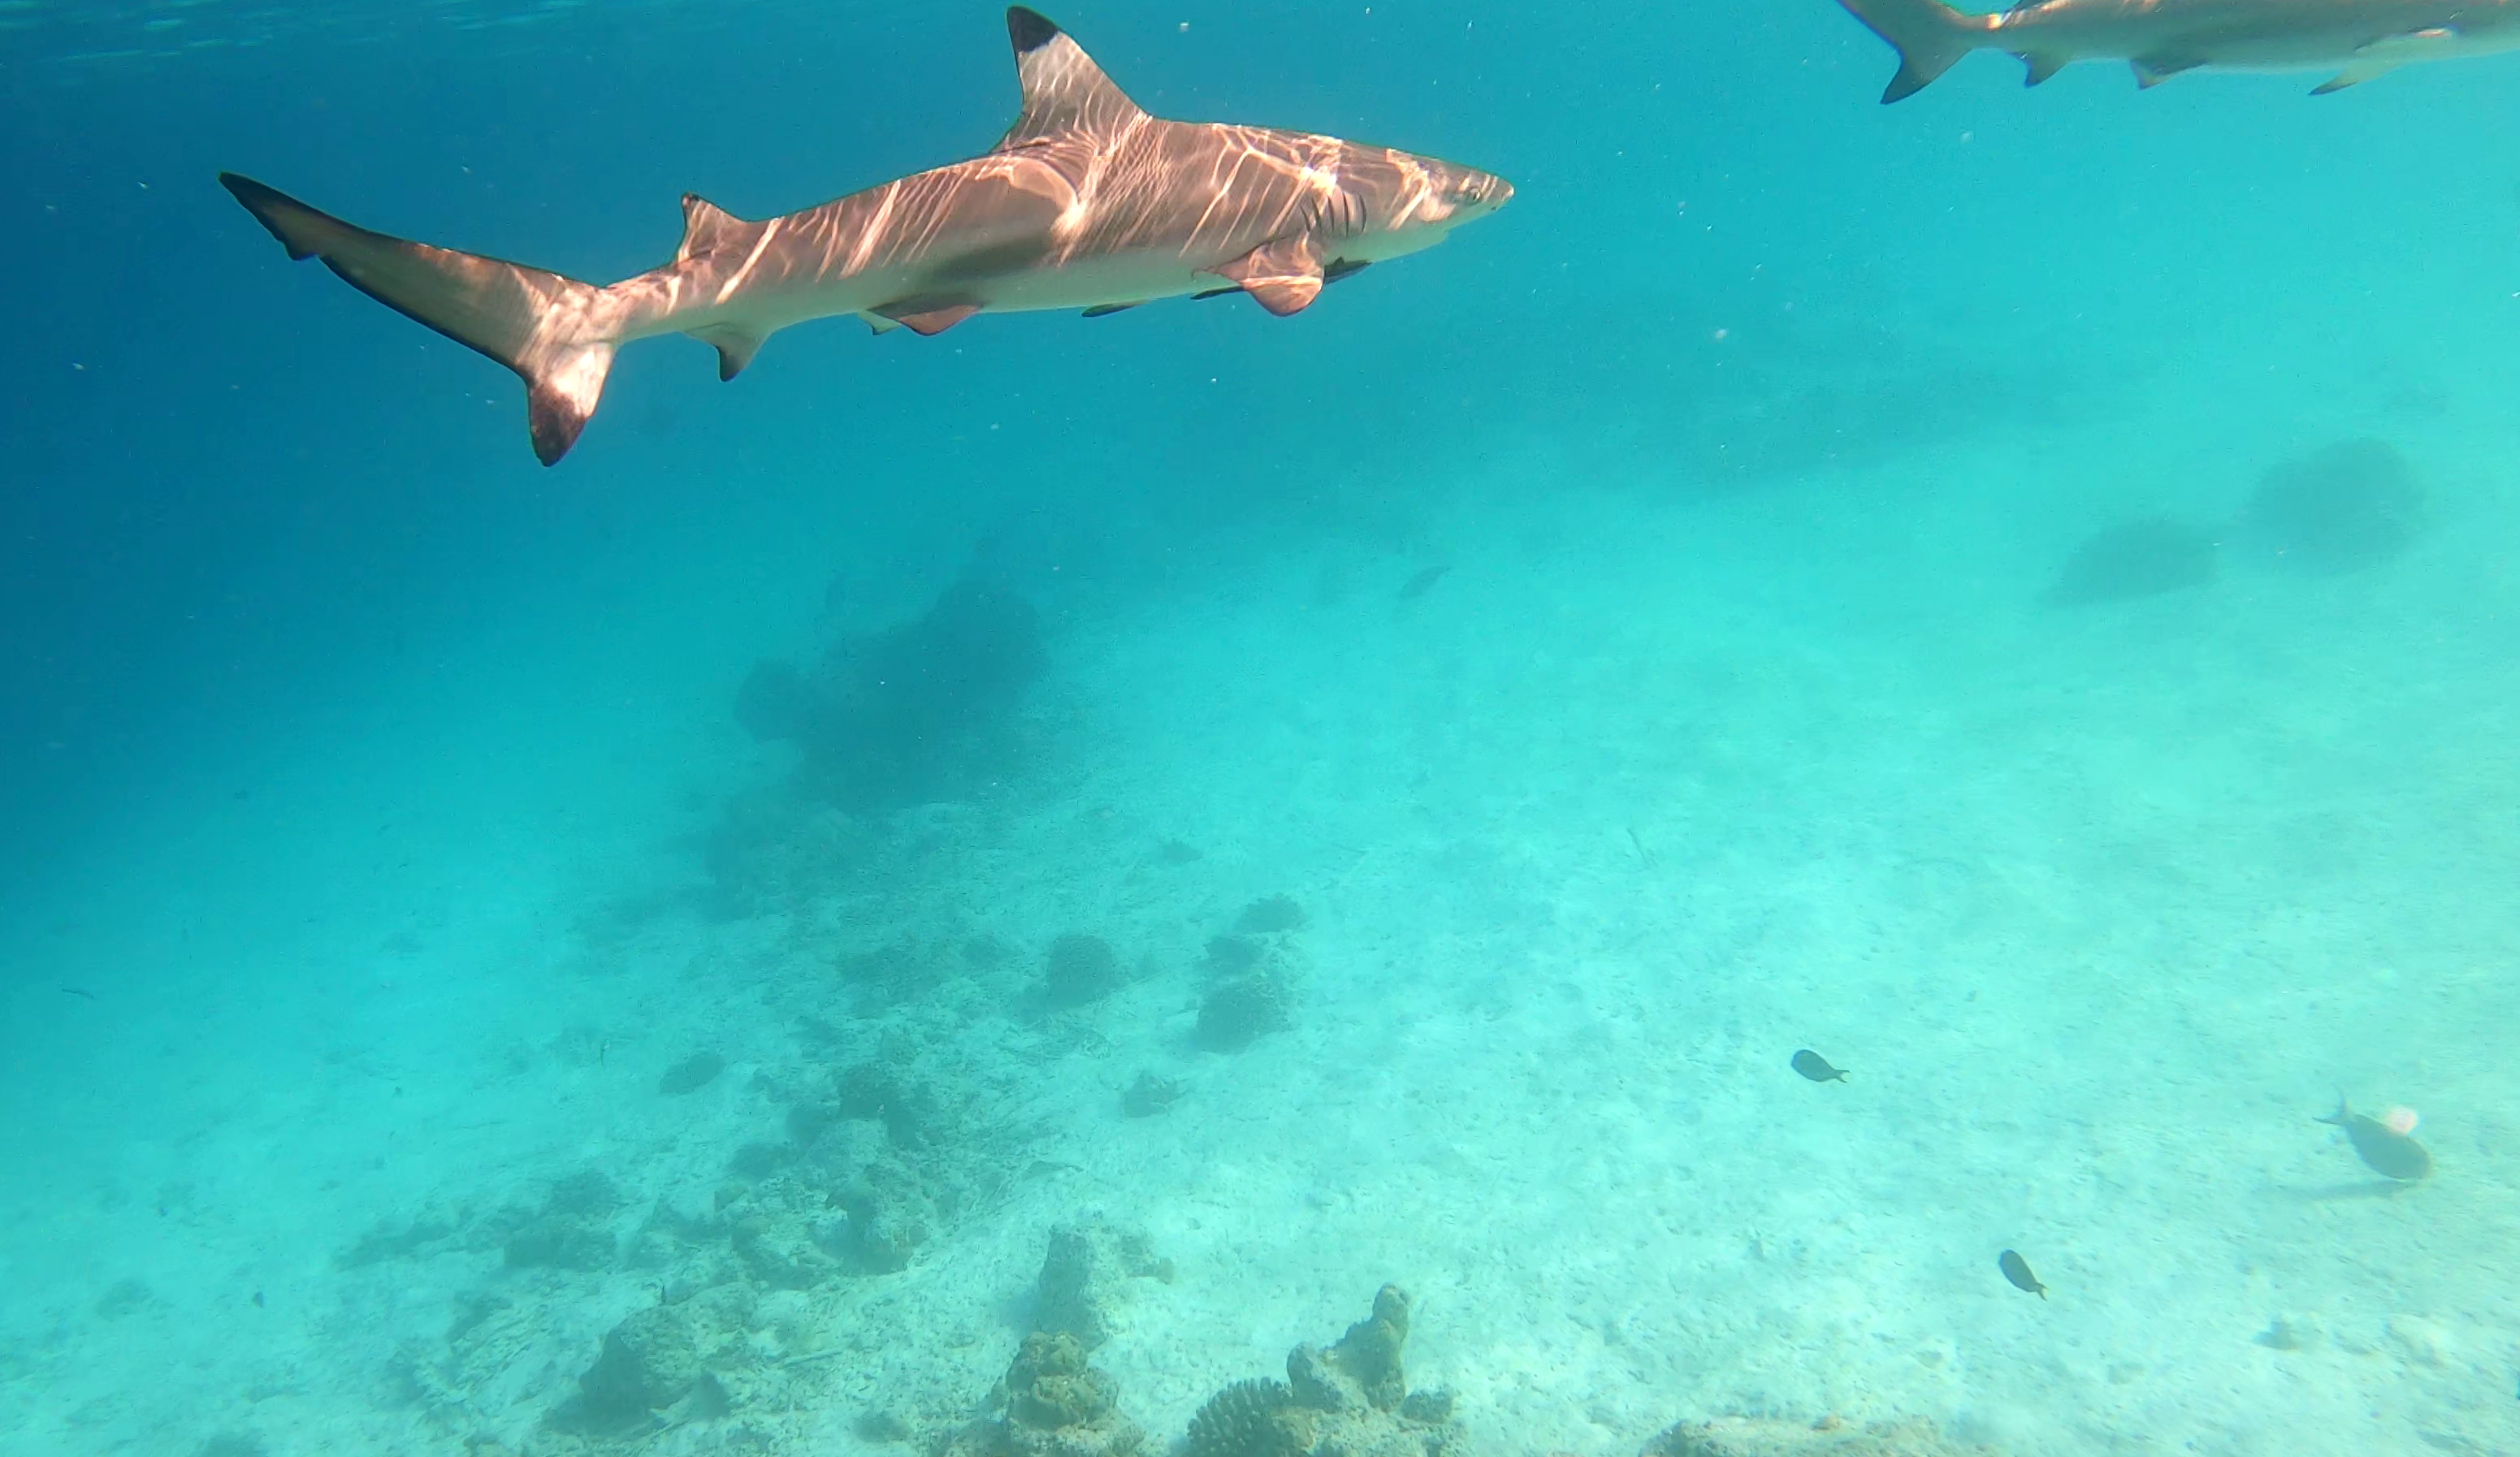 Blaktip reef Shark - Squalo Pinna nera - Carcharhinus melanopterus - www.intotheblue.it